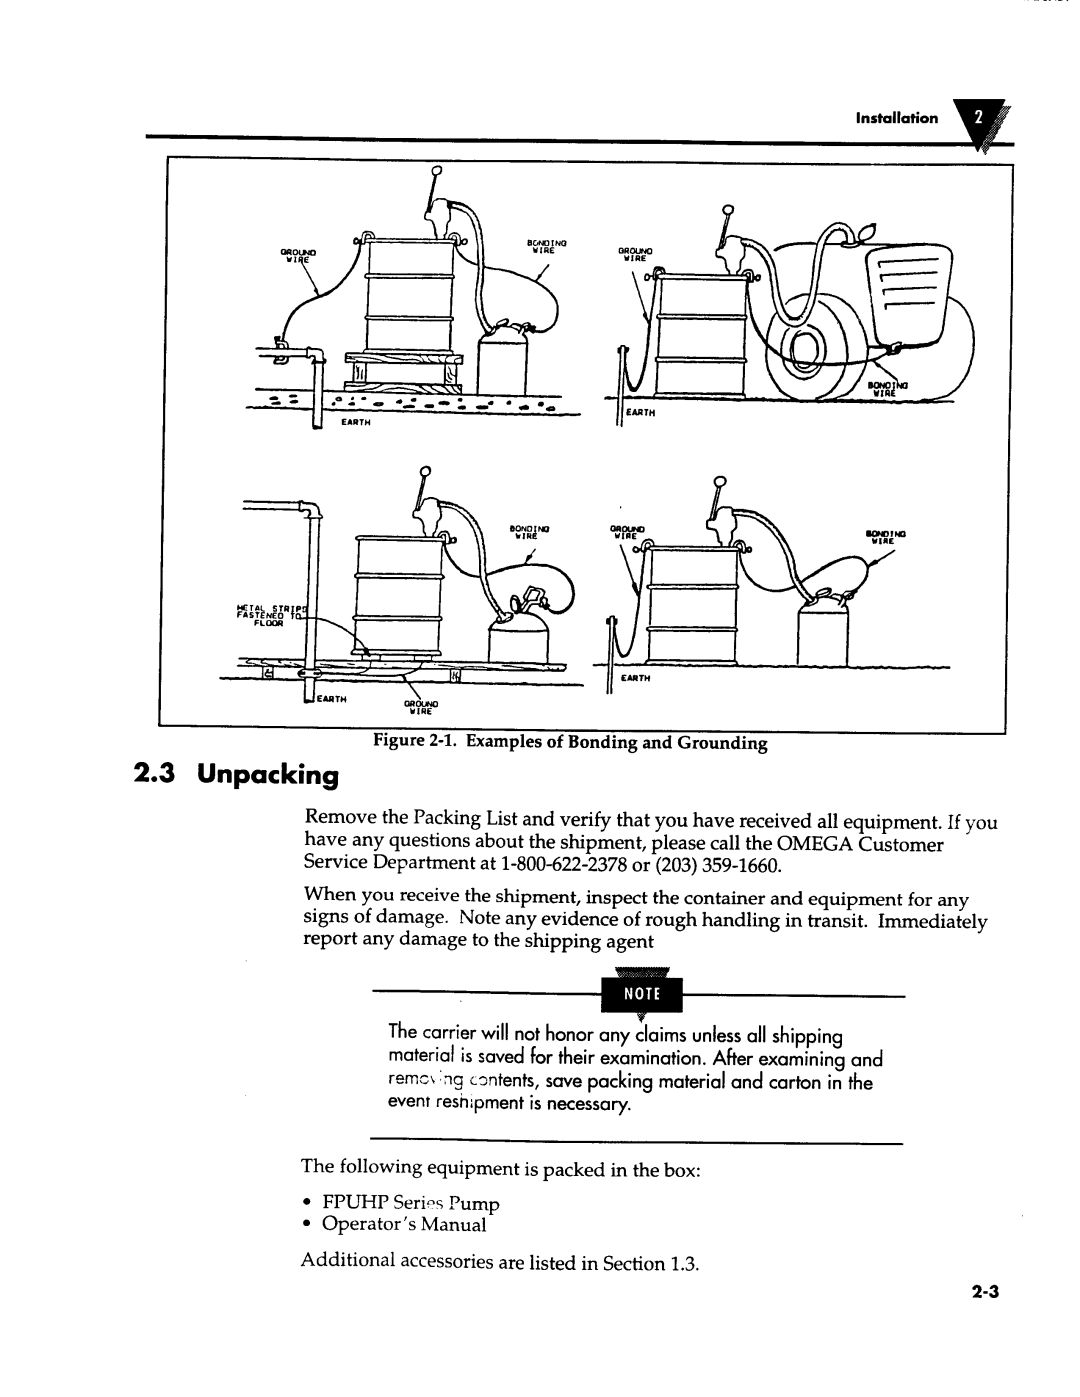 Omega Engineering FPUHP manual 